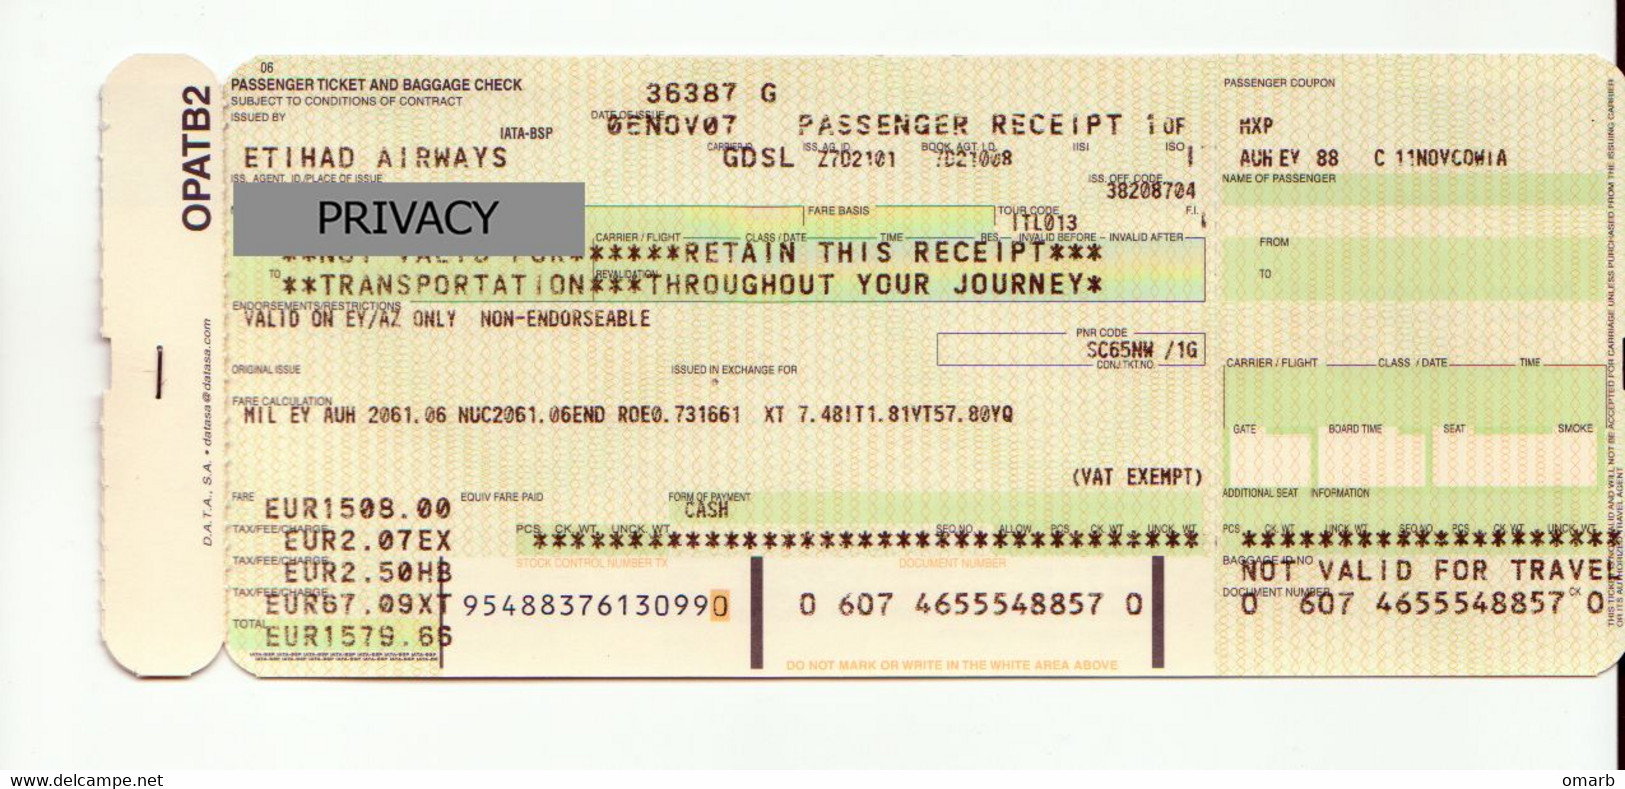 Alt1126 Etihad Airways Billets Avion Ticket Biglietto Aereo Boarding Passenger Receipt Imbarco Milano Abu Dhabi EAU 2007 - Wereld